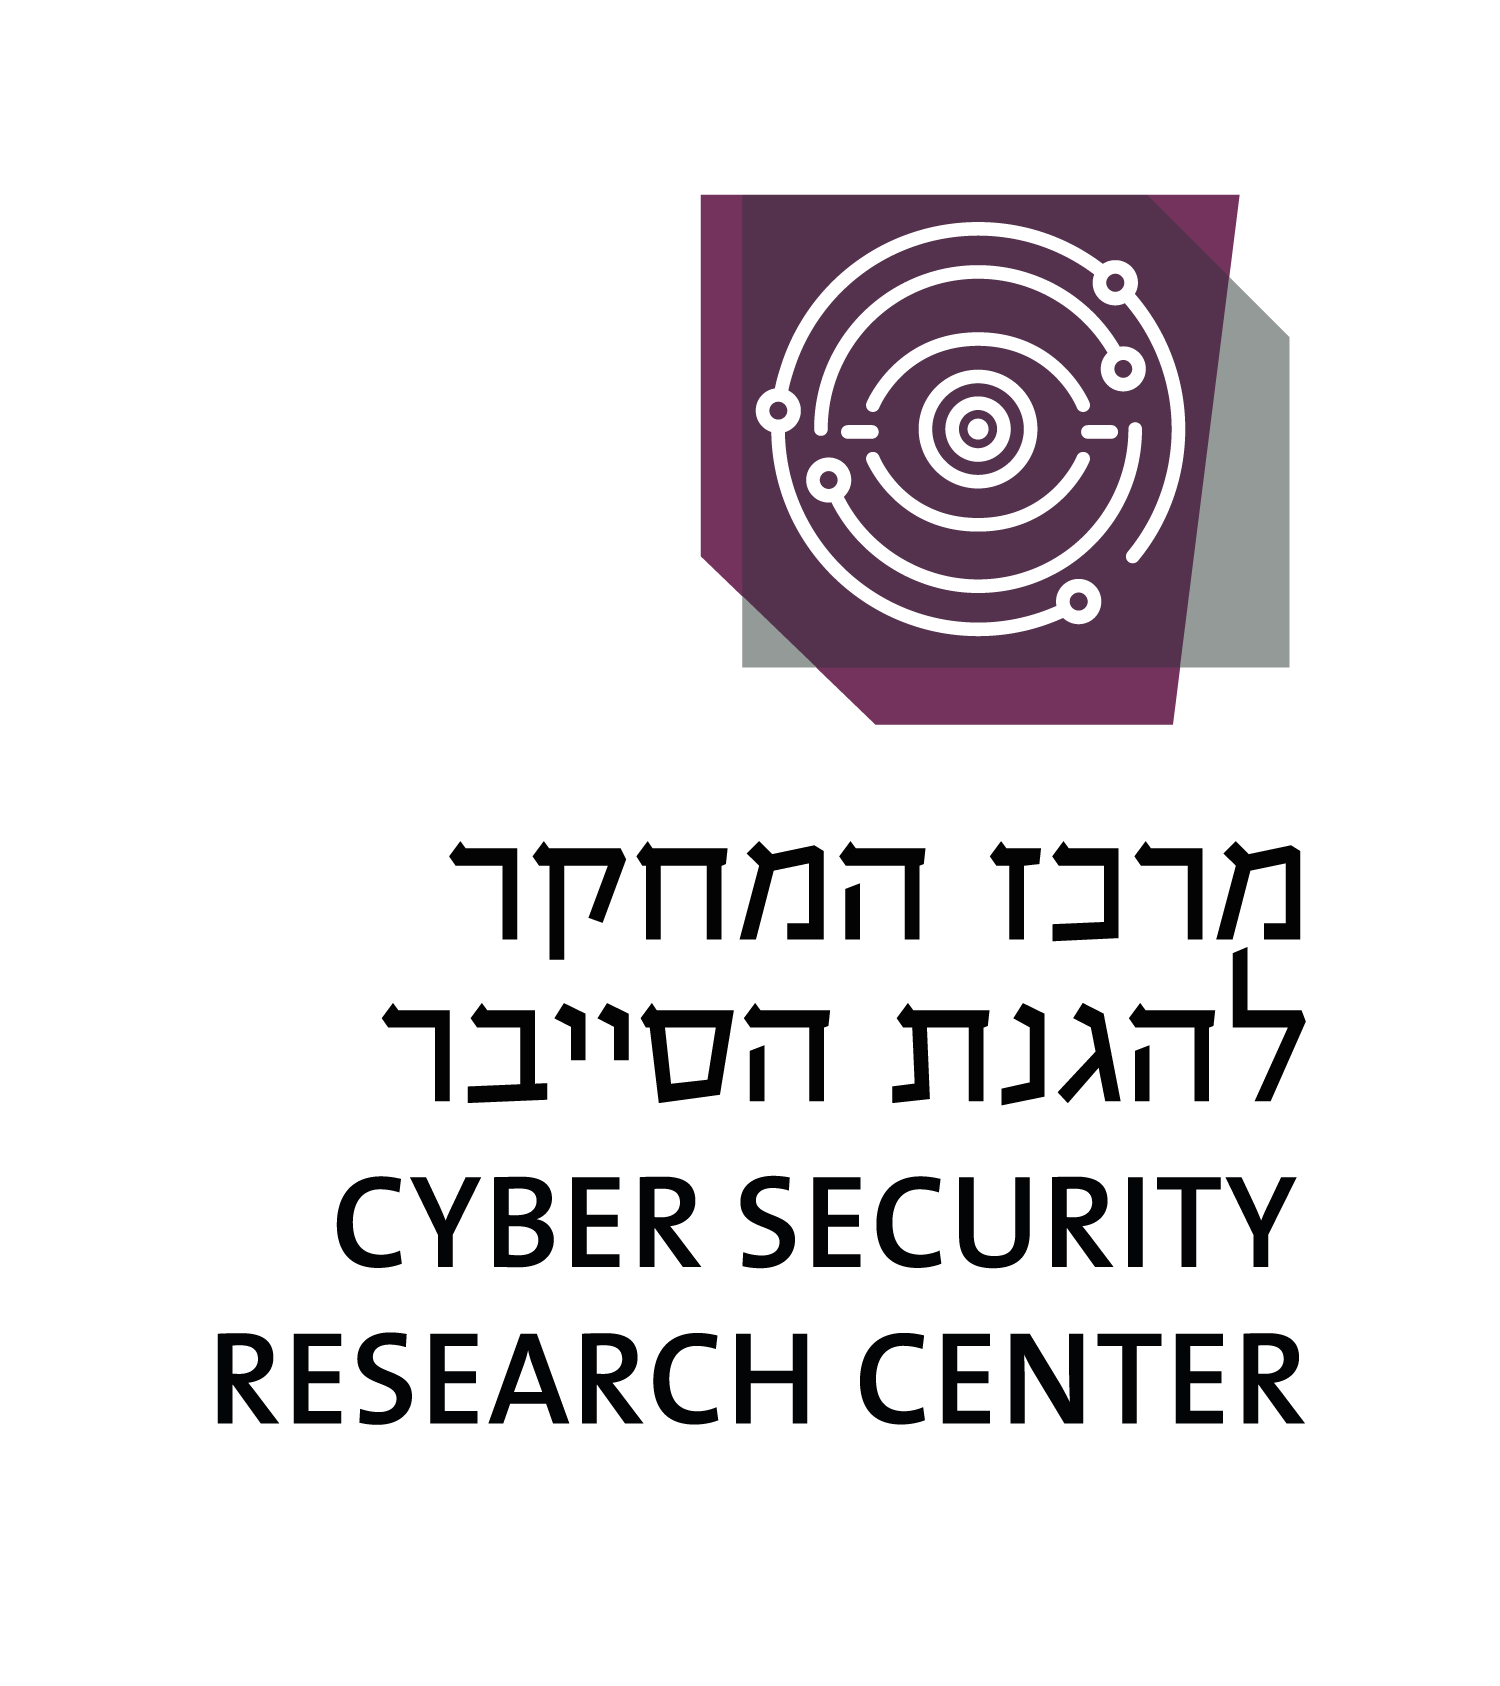 CyberSecurity logo